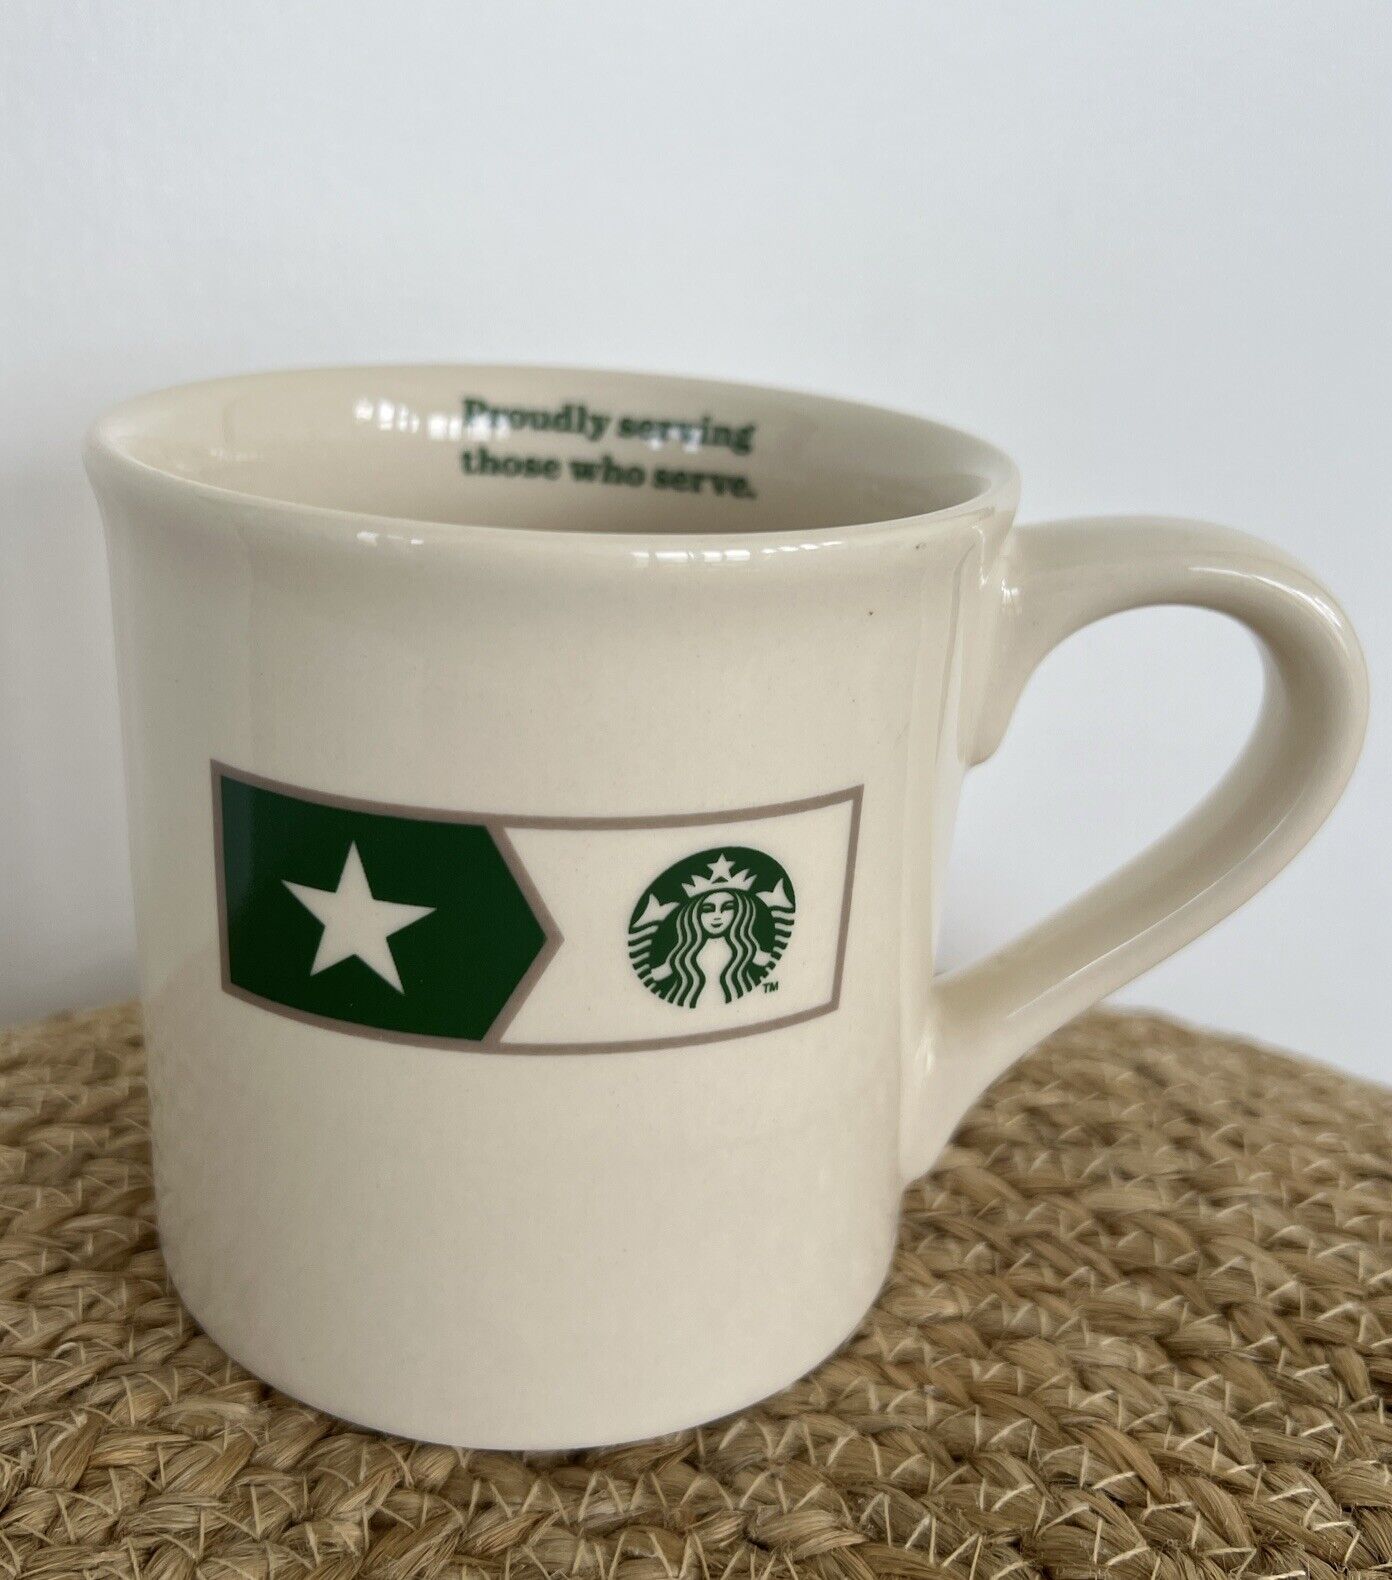 Starbucks 2013 Military Proudly Serving Those Who Serve  Coffee Cup Mug 14fl oz